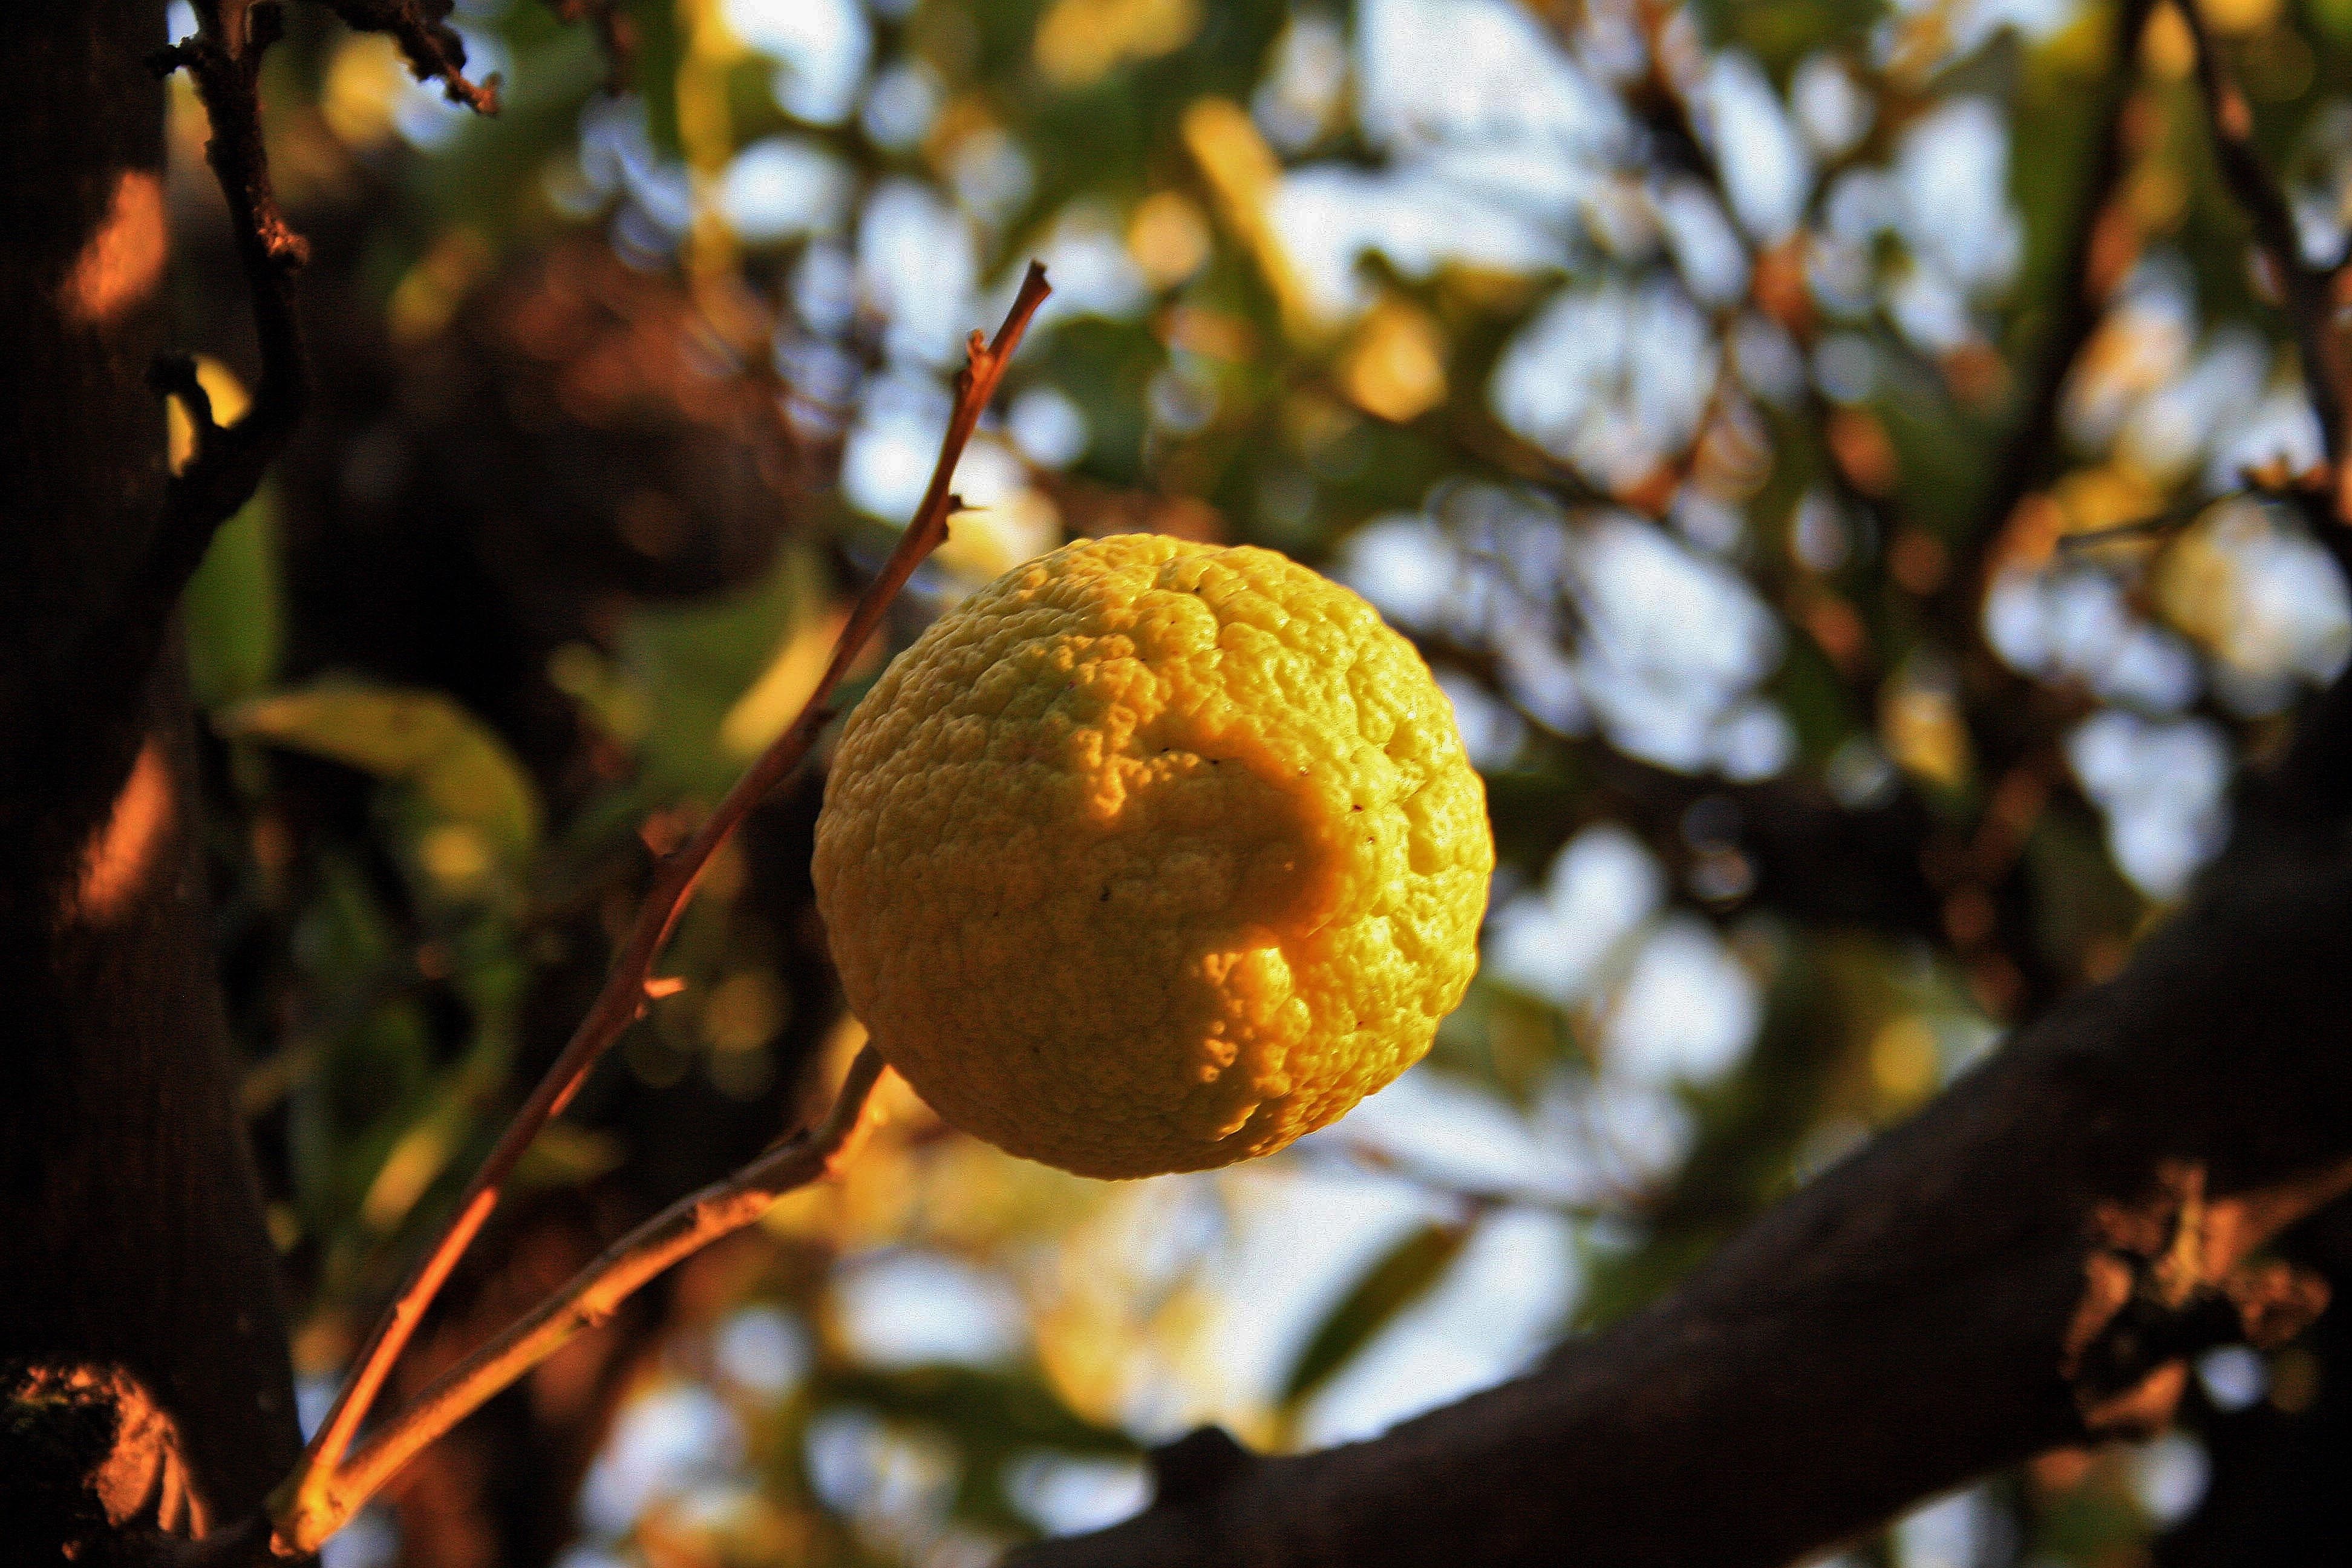 yellow round fruit